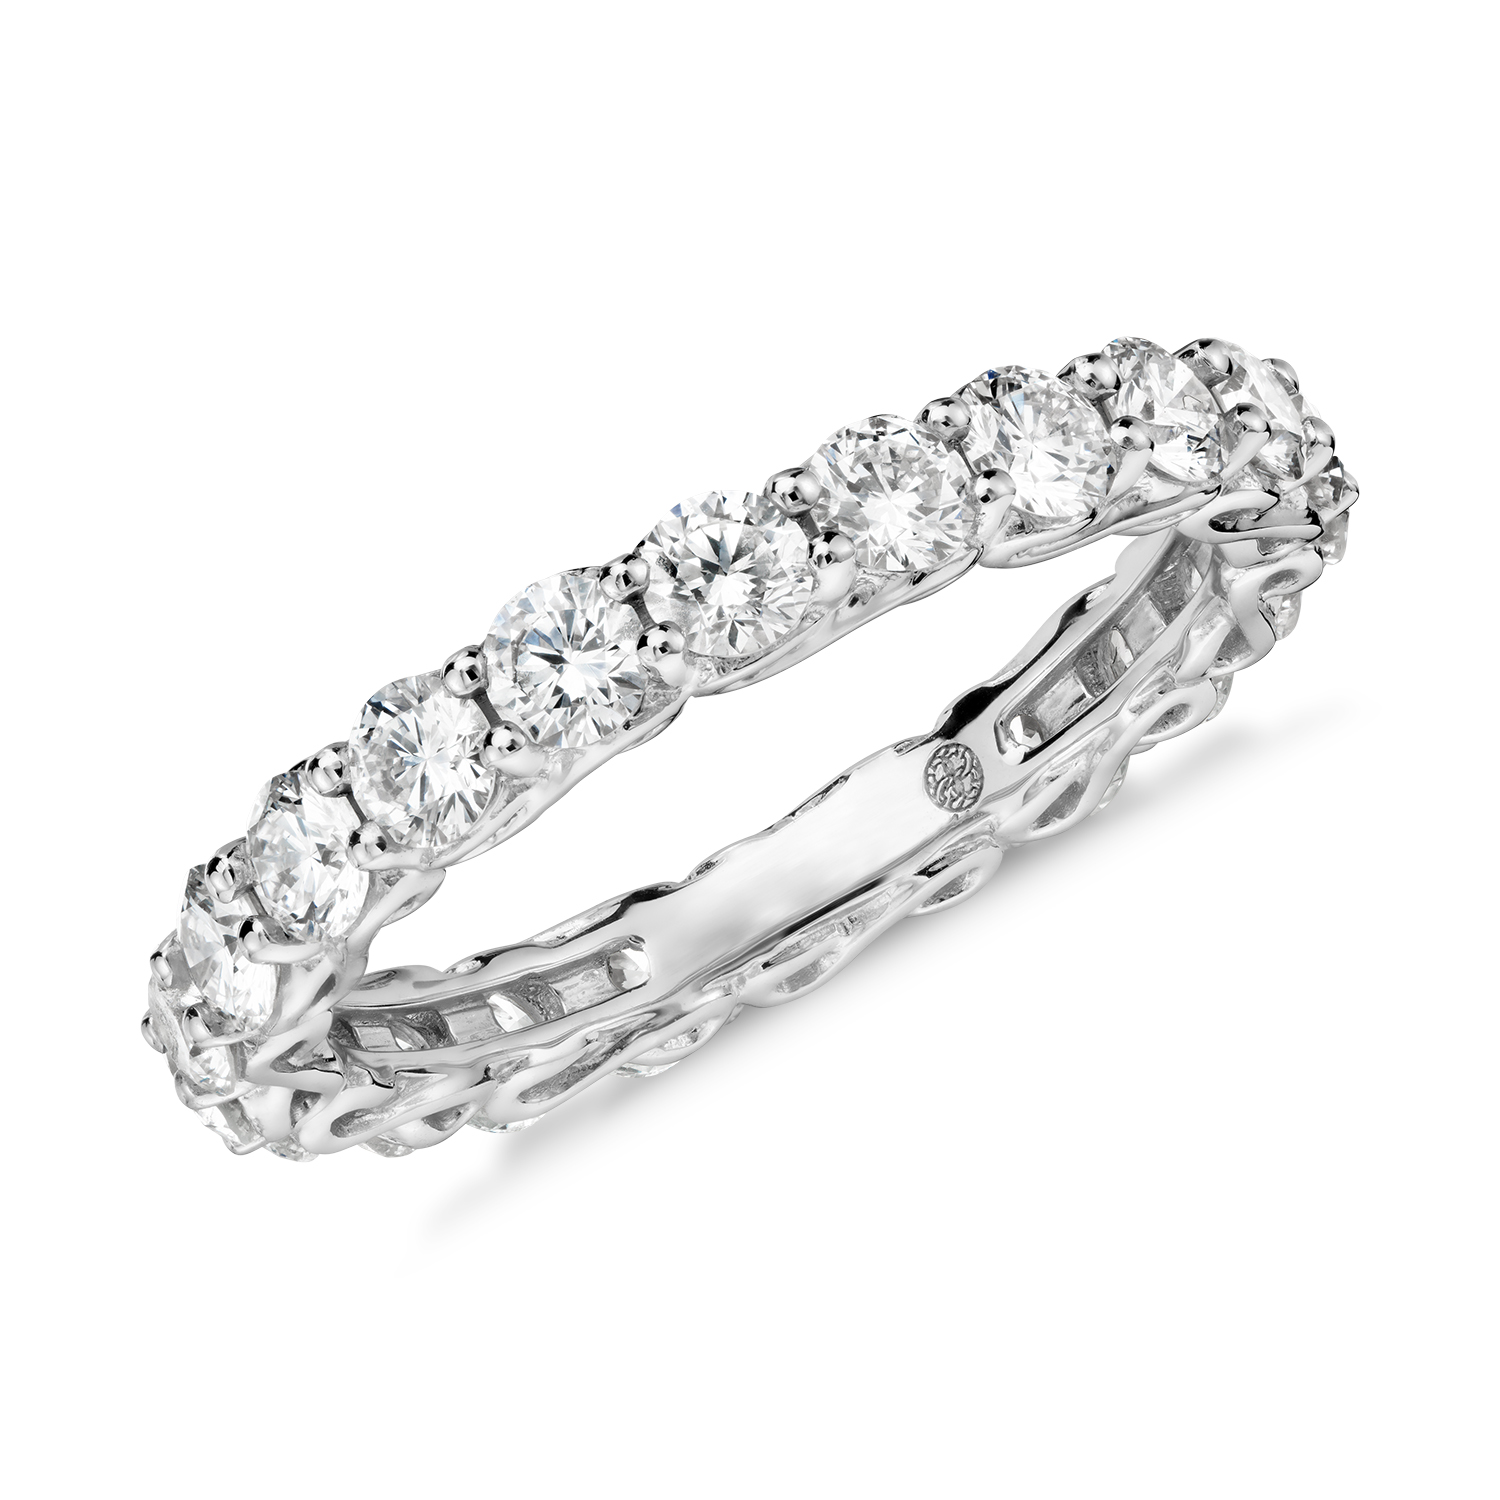 53778_Colin Cowie Infinity Diamond Eternity Ring in Platinum (2 ct. tw.).jpg